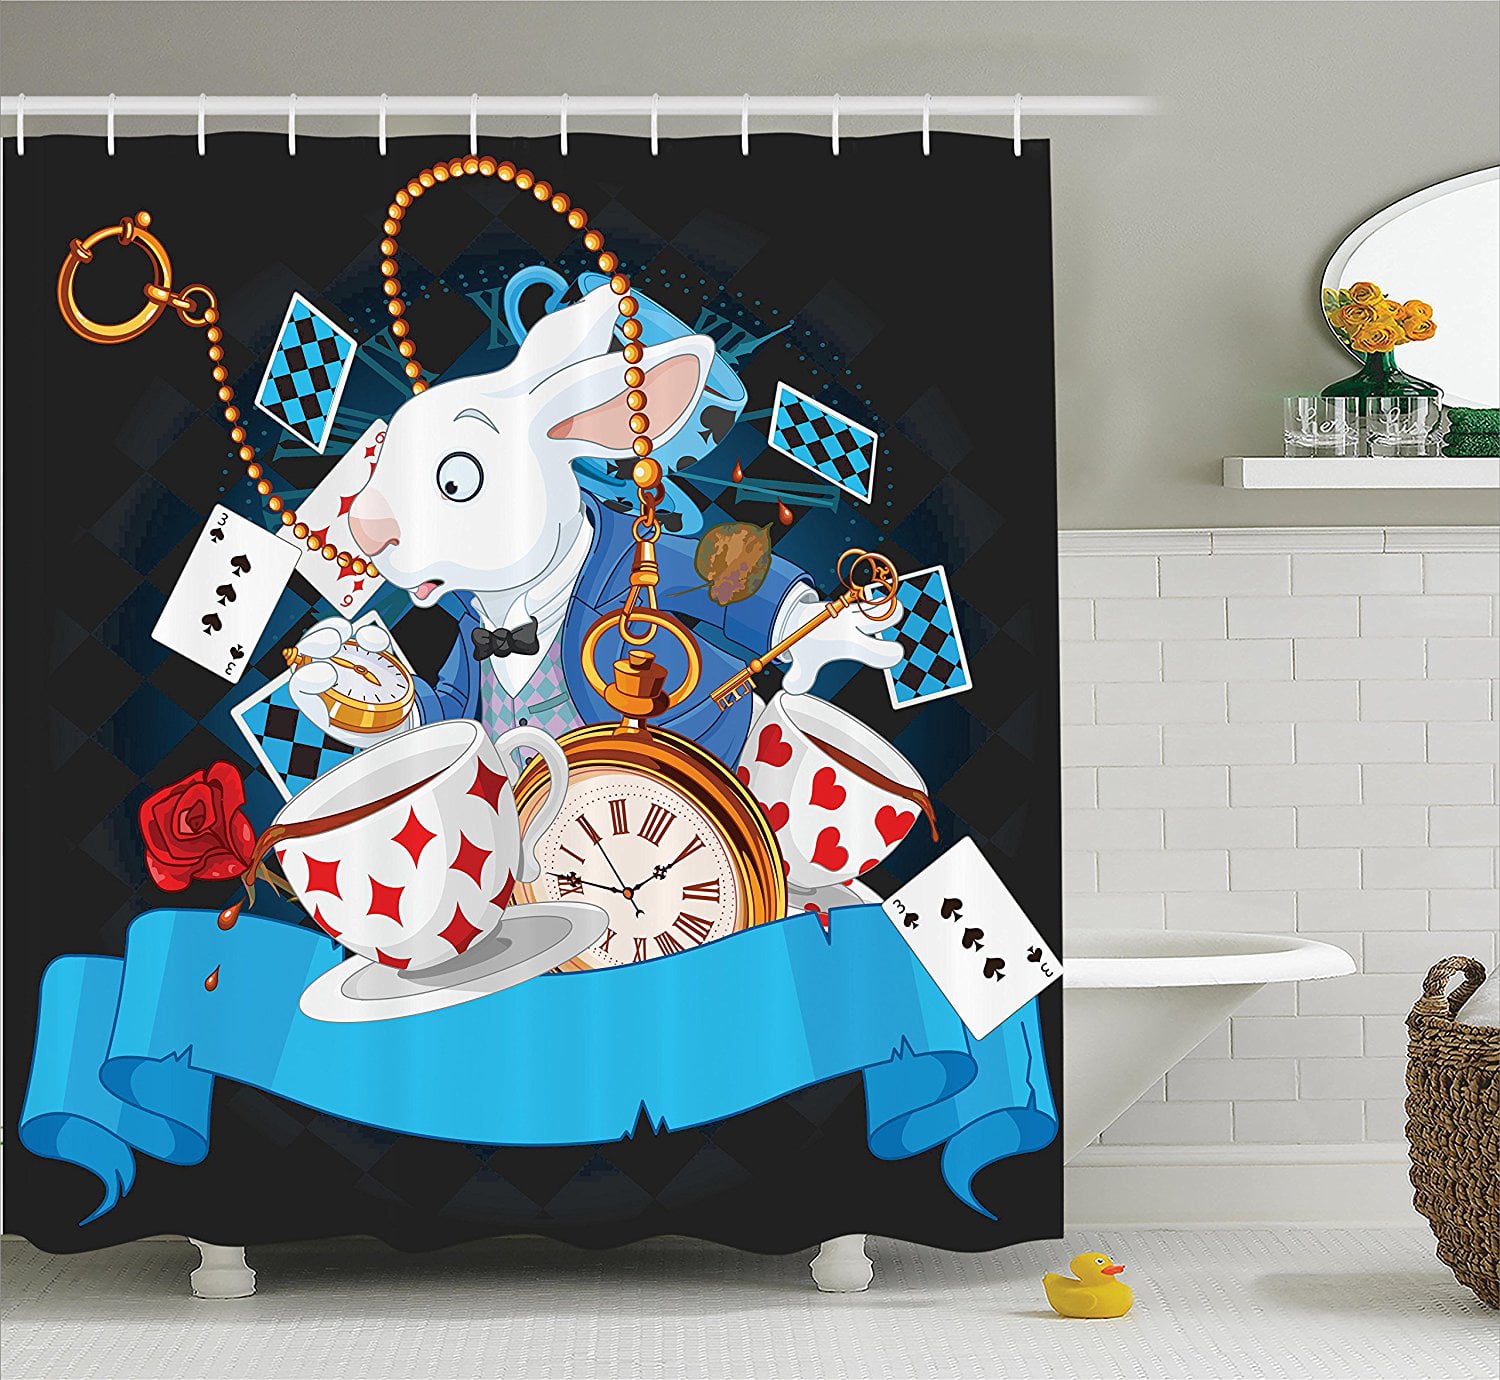 Alice in Wonderland Pattern Shower Curtain Fabric Decor Set with Hooks 4 Sizes 